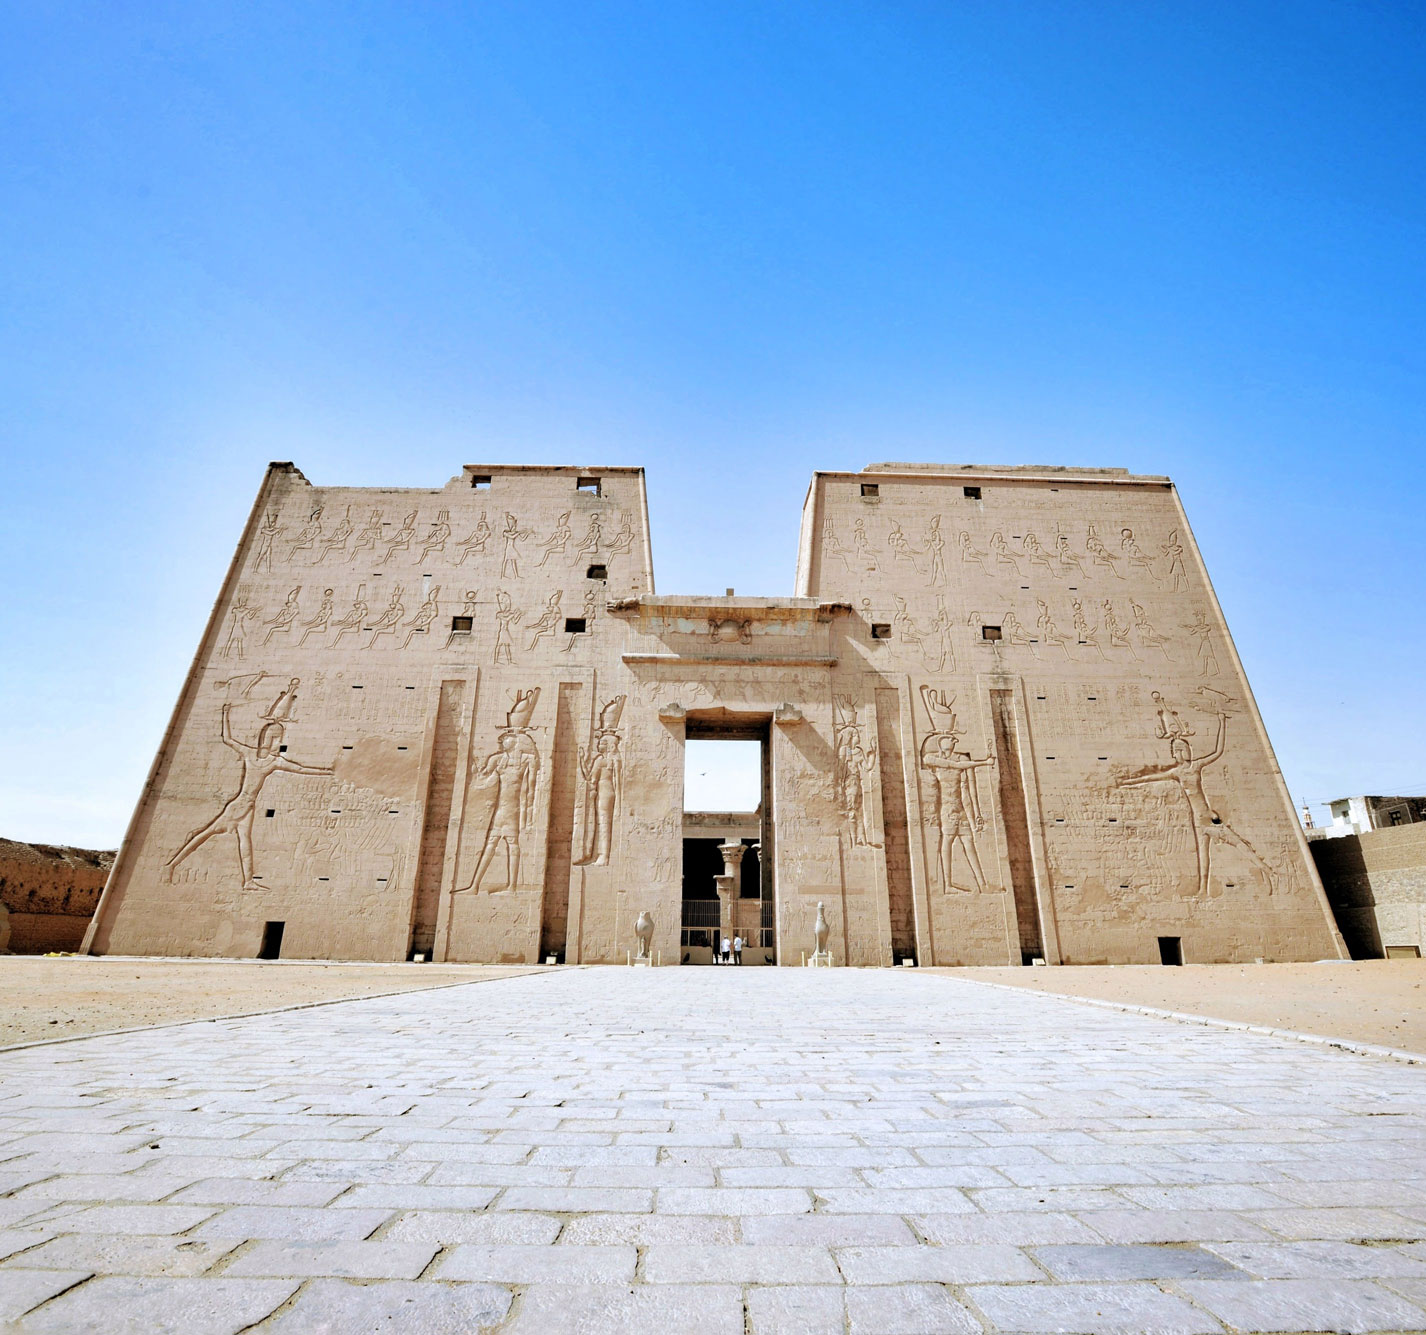 Entrance to the Temple of Horus at Edfu, Egypt